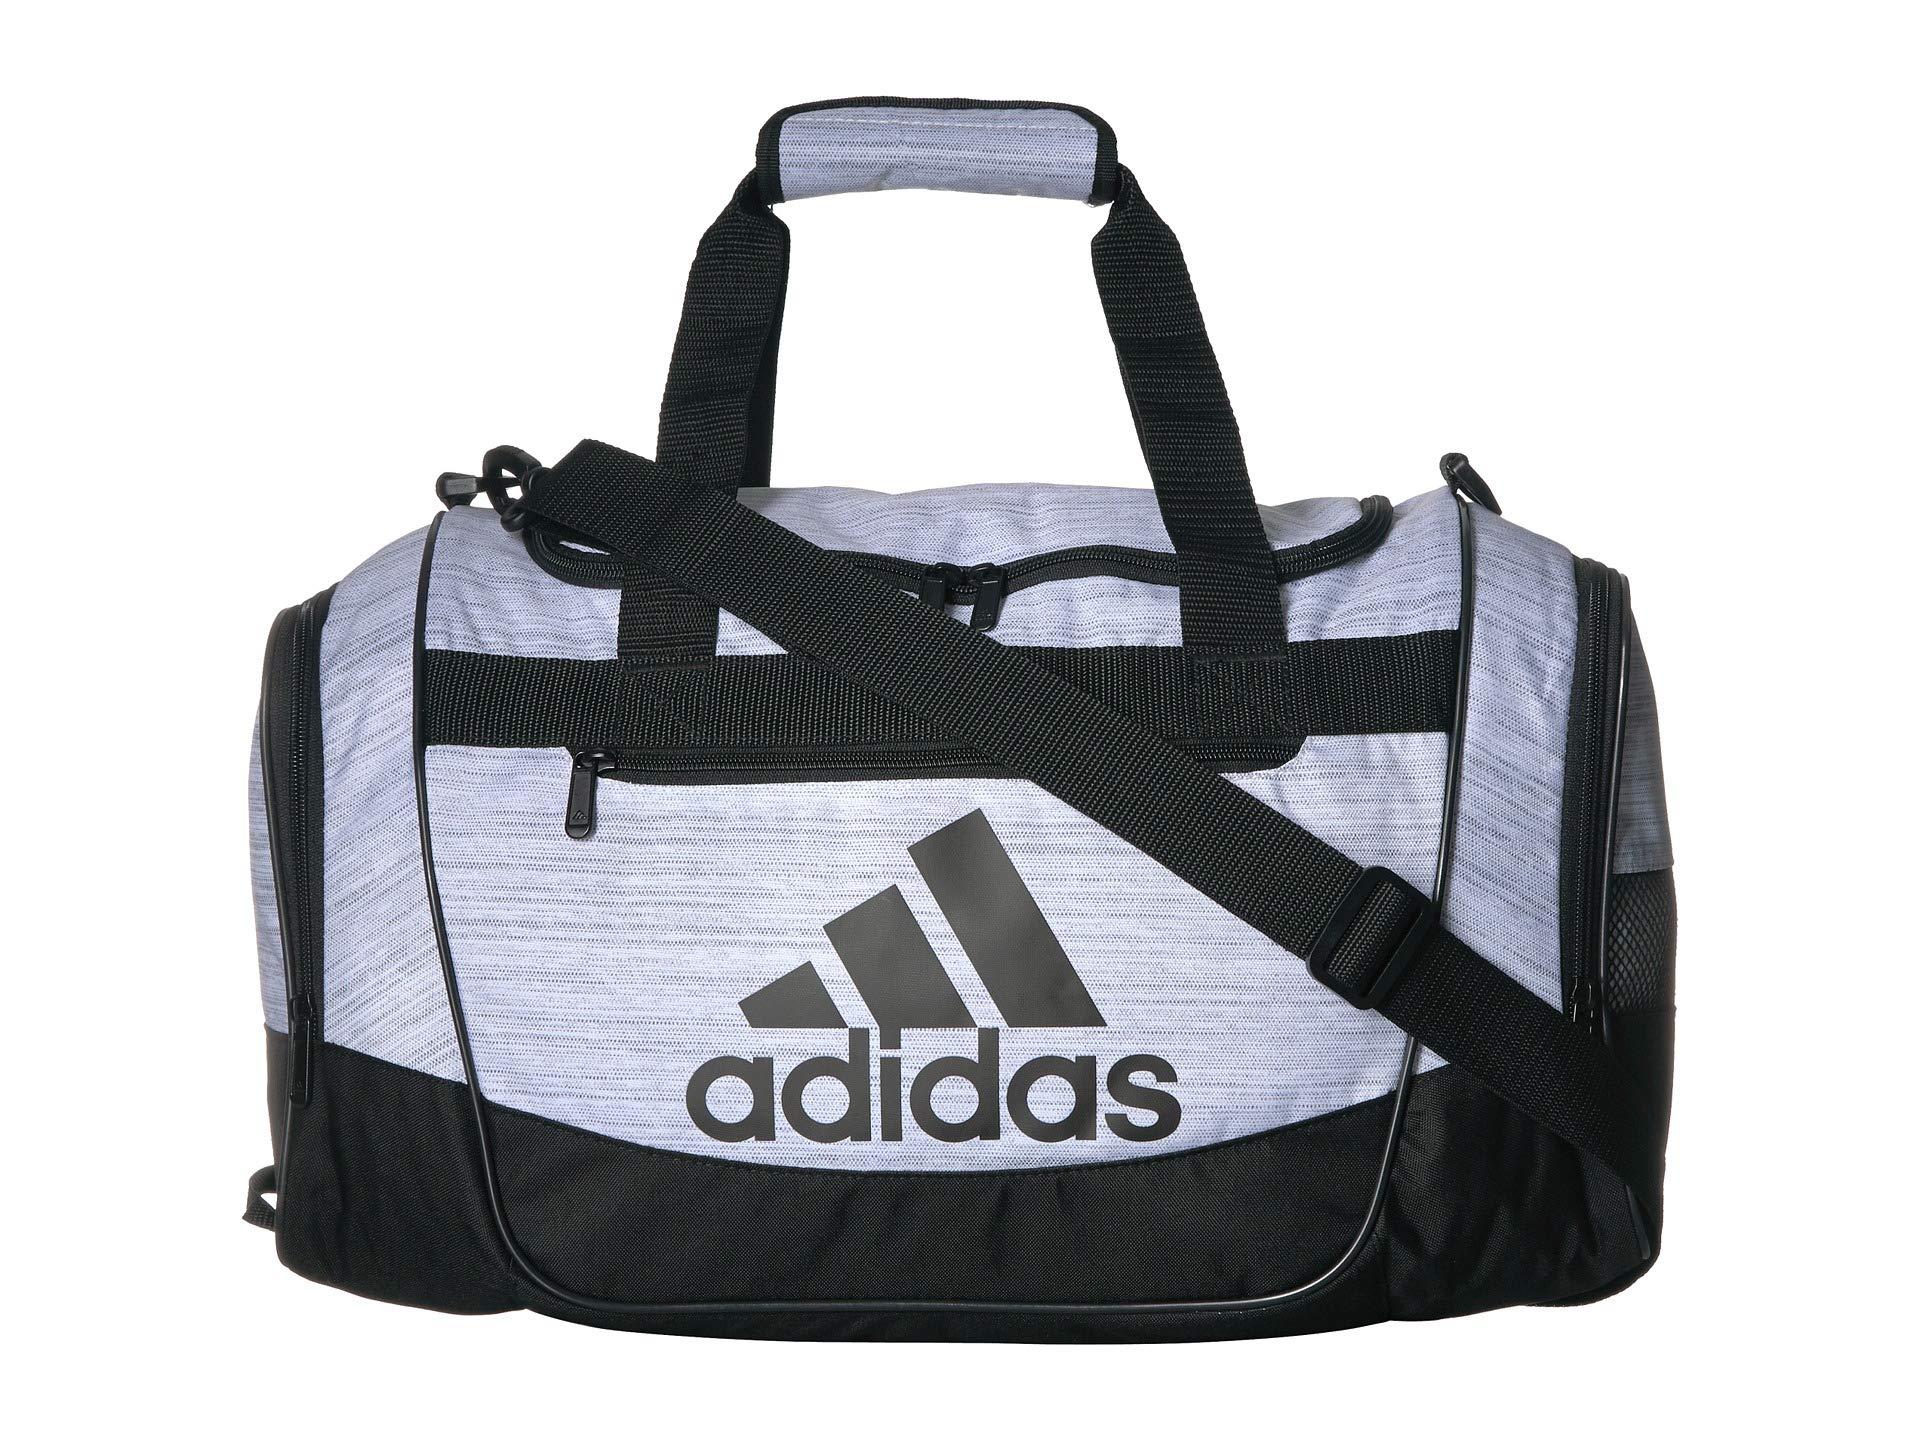 Lyst - adidas Defender Iii Small Duffel (black/white) Duffel Bags in Black